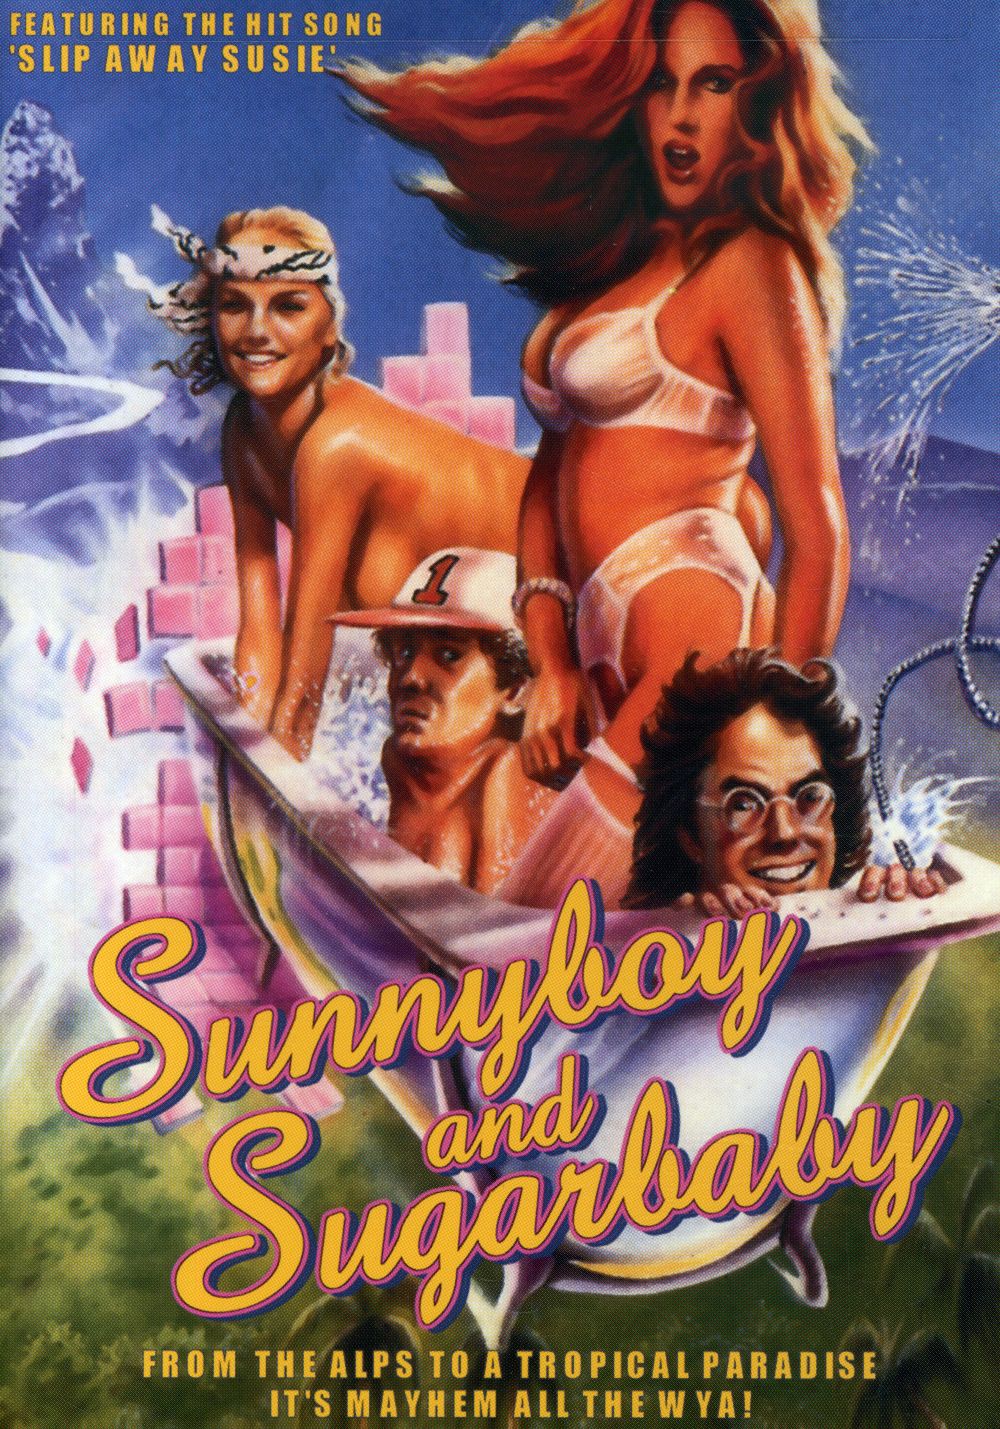 Sunny boy and sugarbaby 1979 threesome erotic